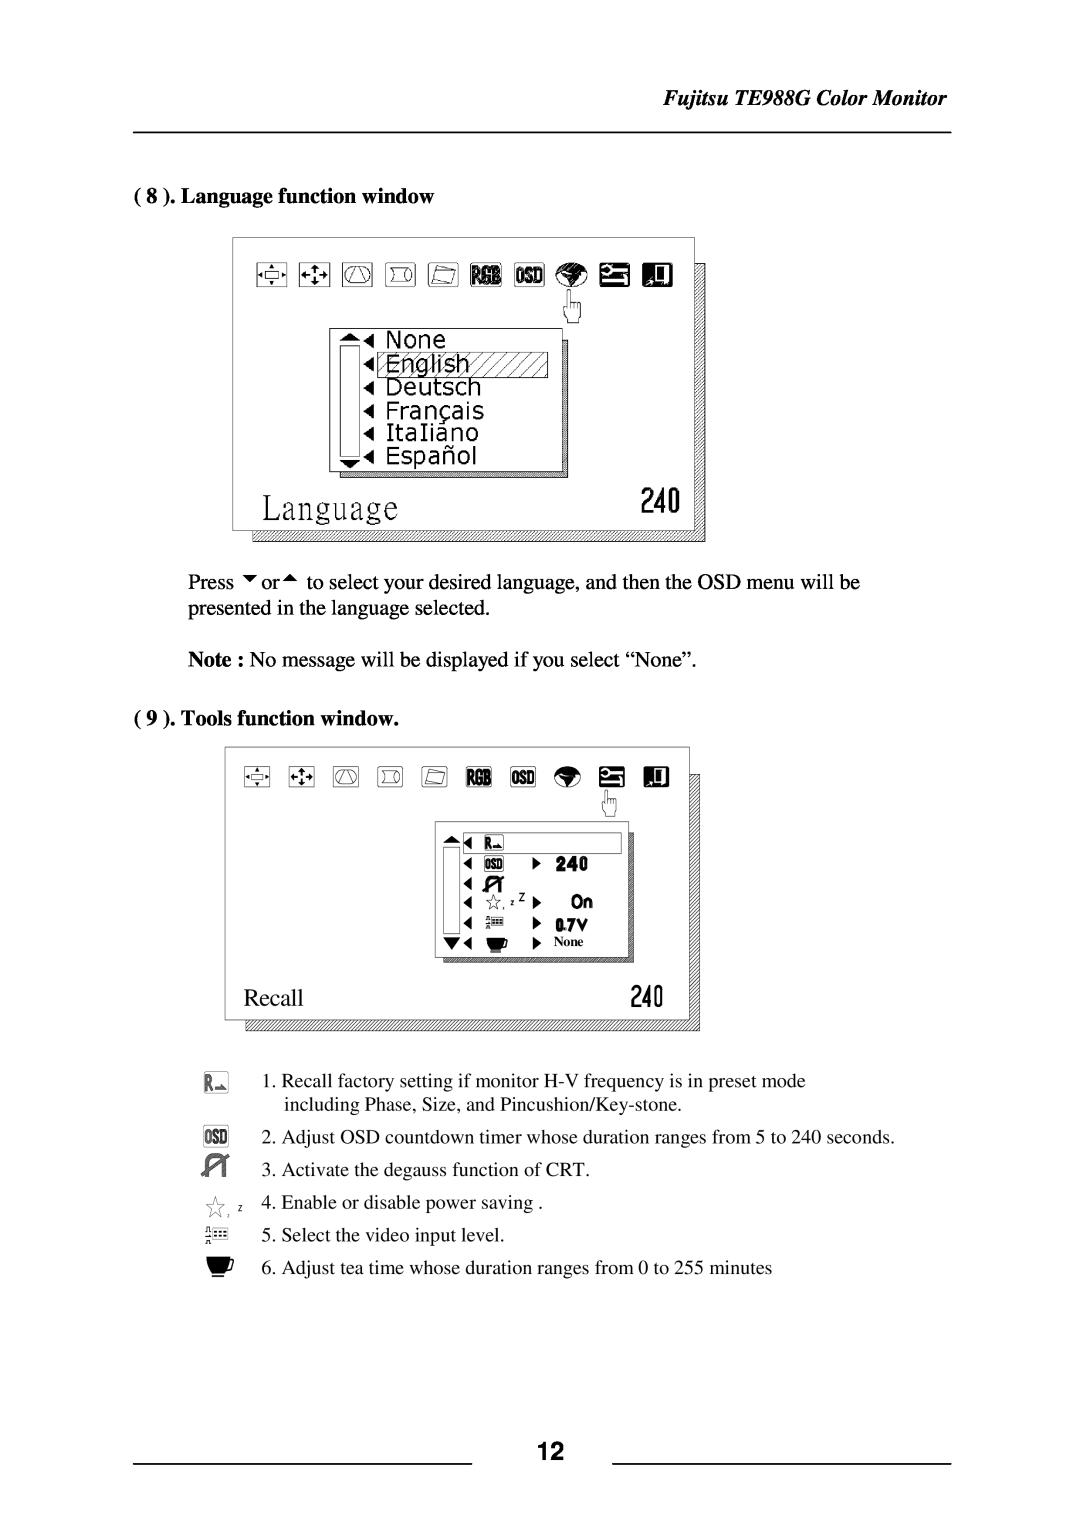 Fujitsu user manual Recall, Fujitsu TE988G Color Monitor, Language function window, Tools function window 